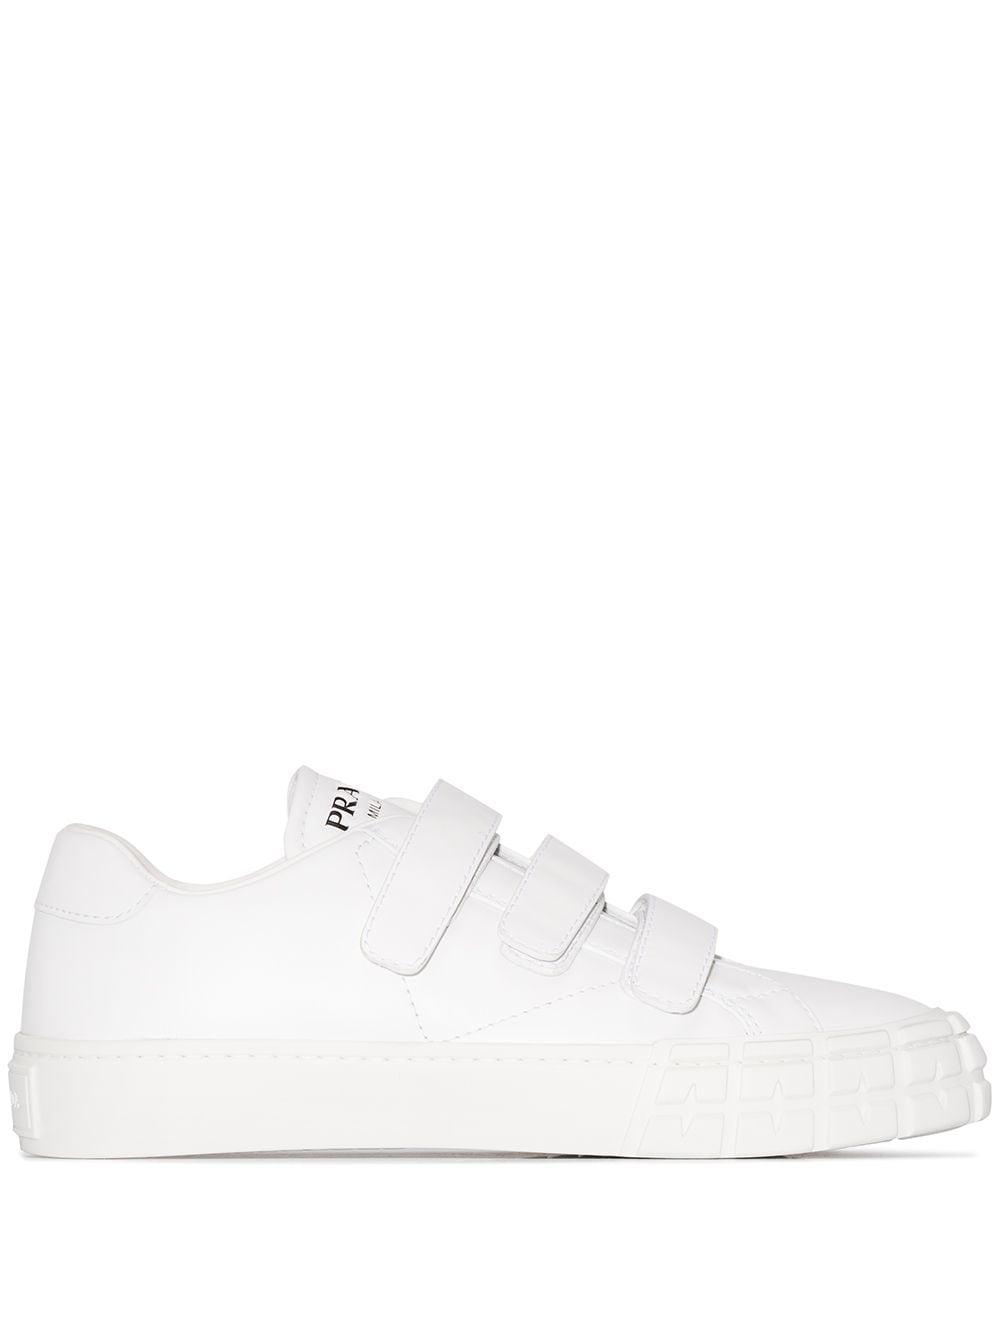 Prada Leather Wheel Velcro Sneakers in White | Lyst